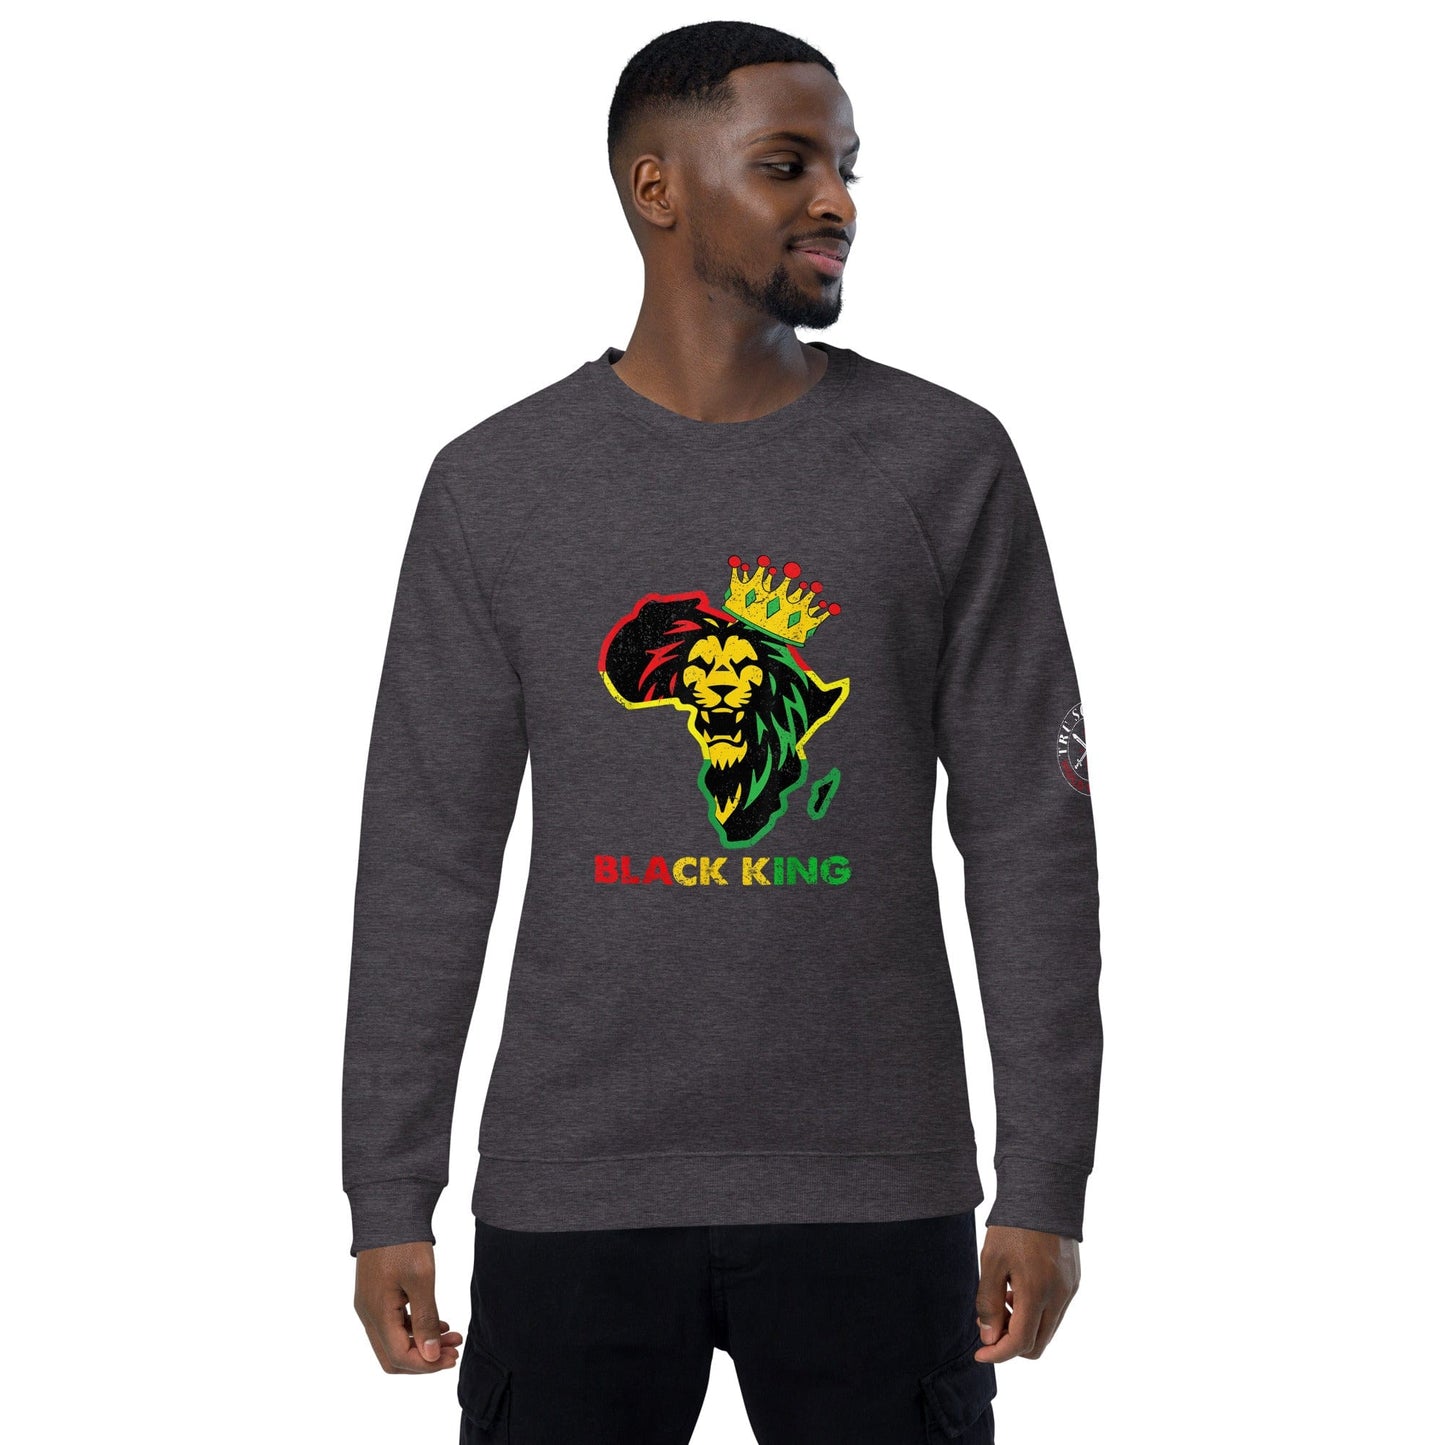 Tru Soldier Sportswear  Charcoal Melange / XS Black King organic raglan sweatshirt